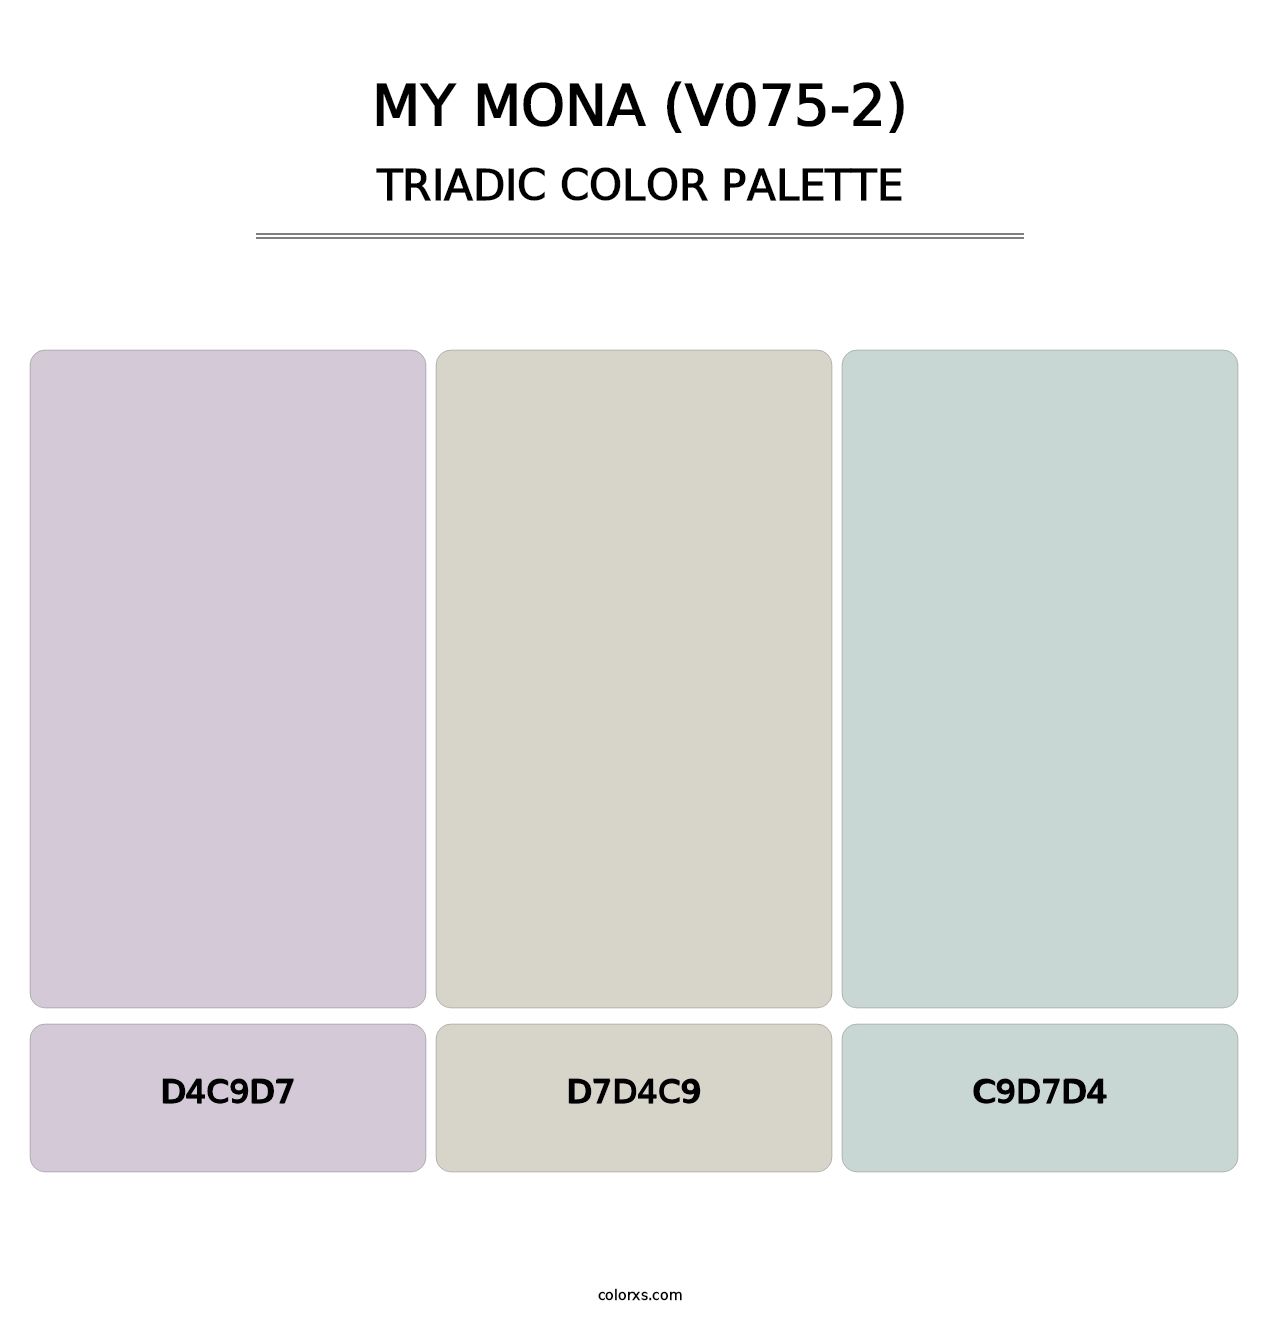 My Mona (V075-2) - Triadic Color Palette